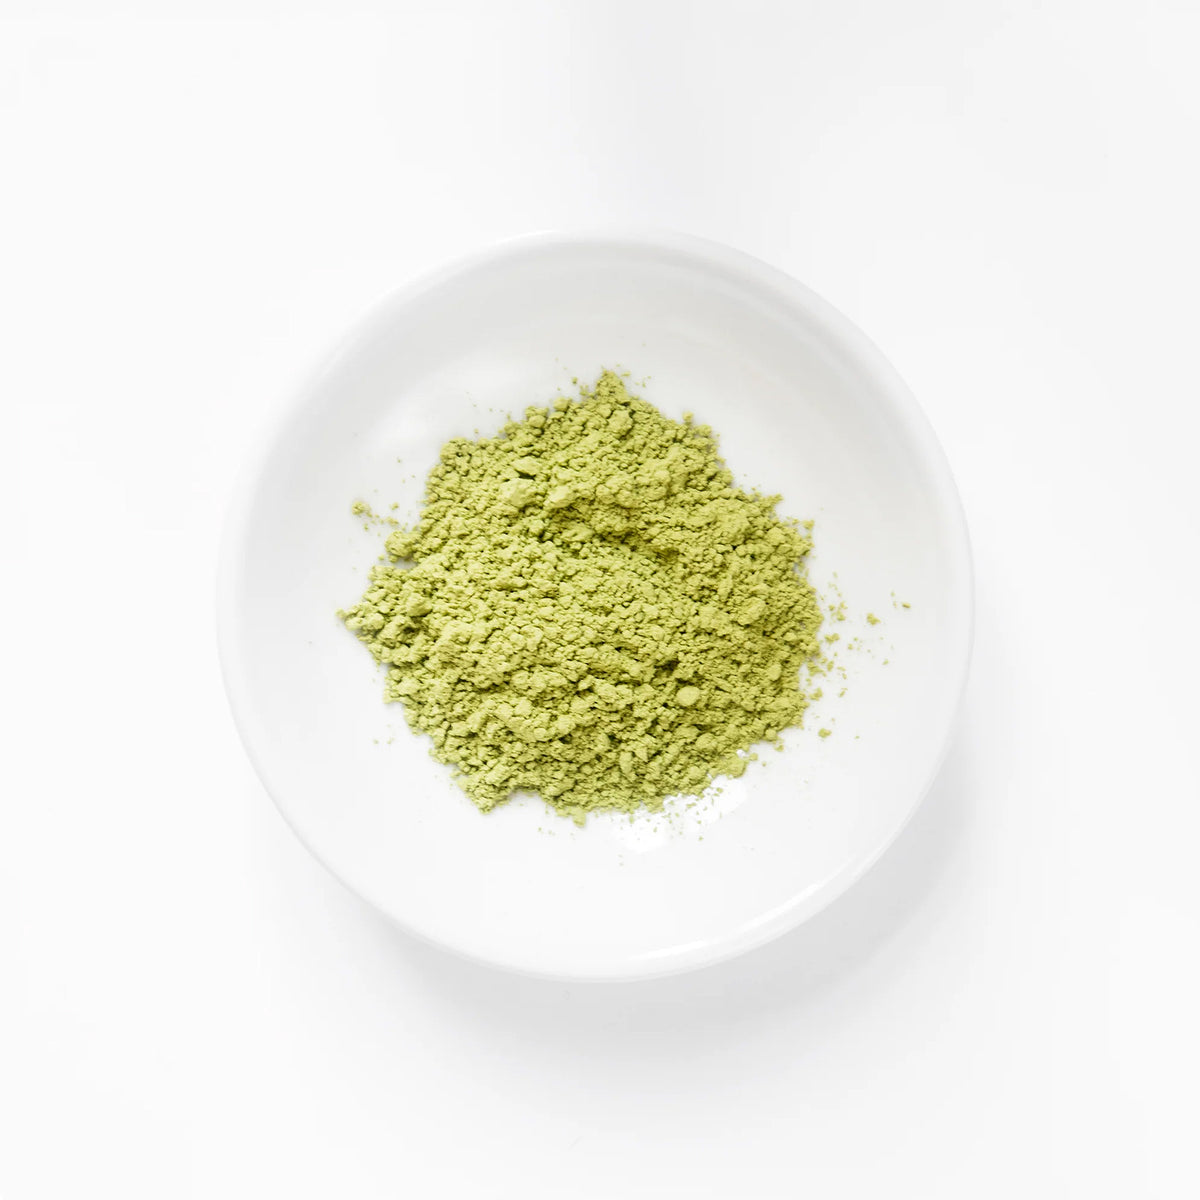 Certified Organic "Matcha" Green Tea Powder from Japan (30g/30 Servings) - Horizon Farms